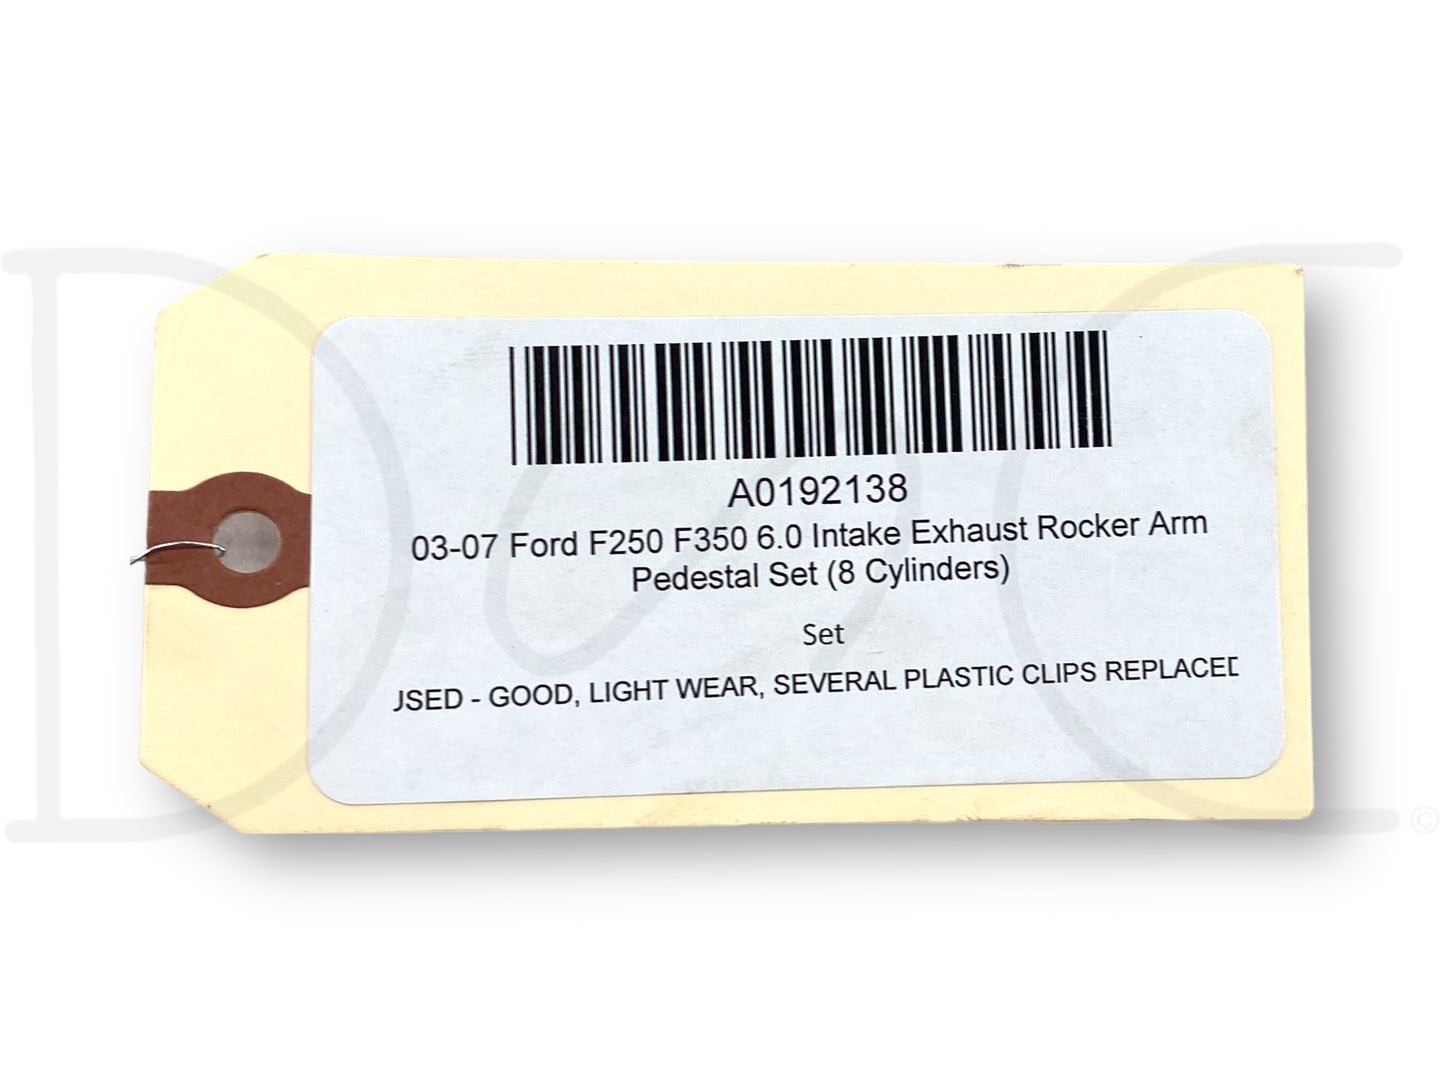 03-07 Ford F250 F350 6.0 Intake Exhaust Rocker Arm Pedestal Set (8 Cylinders)